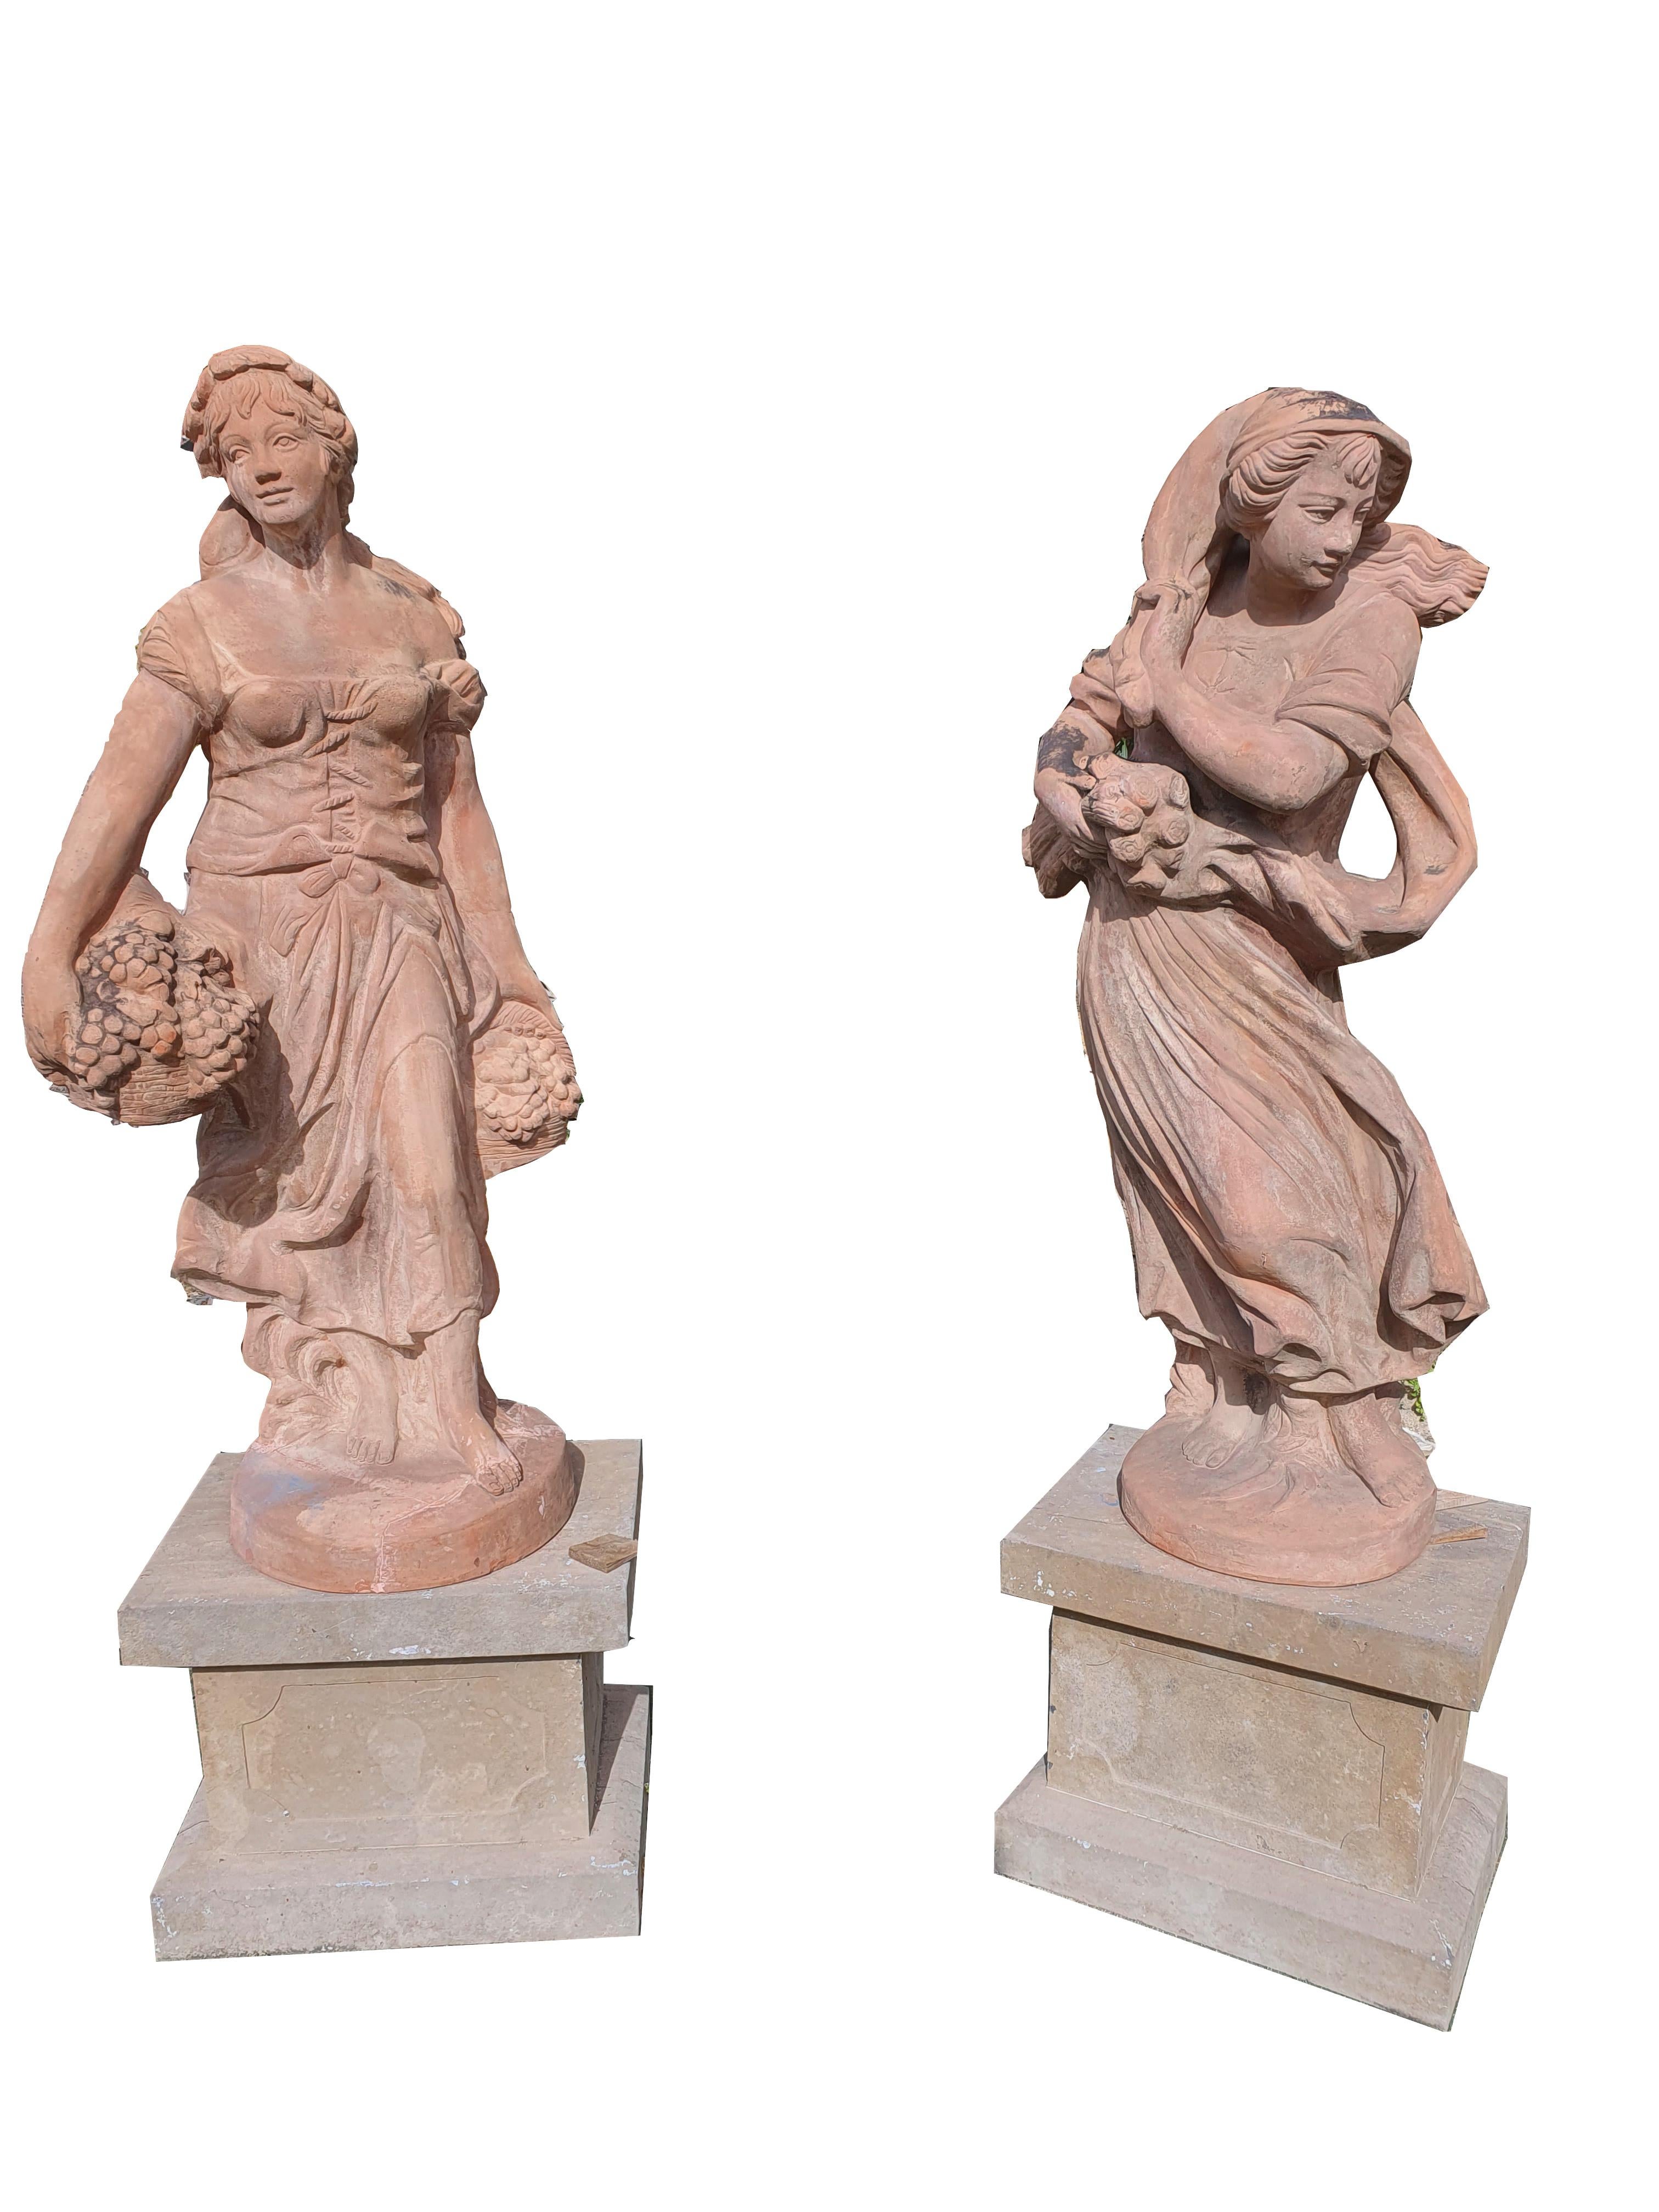 20th century italian sculptors